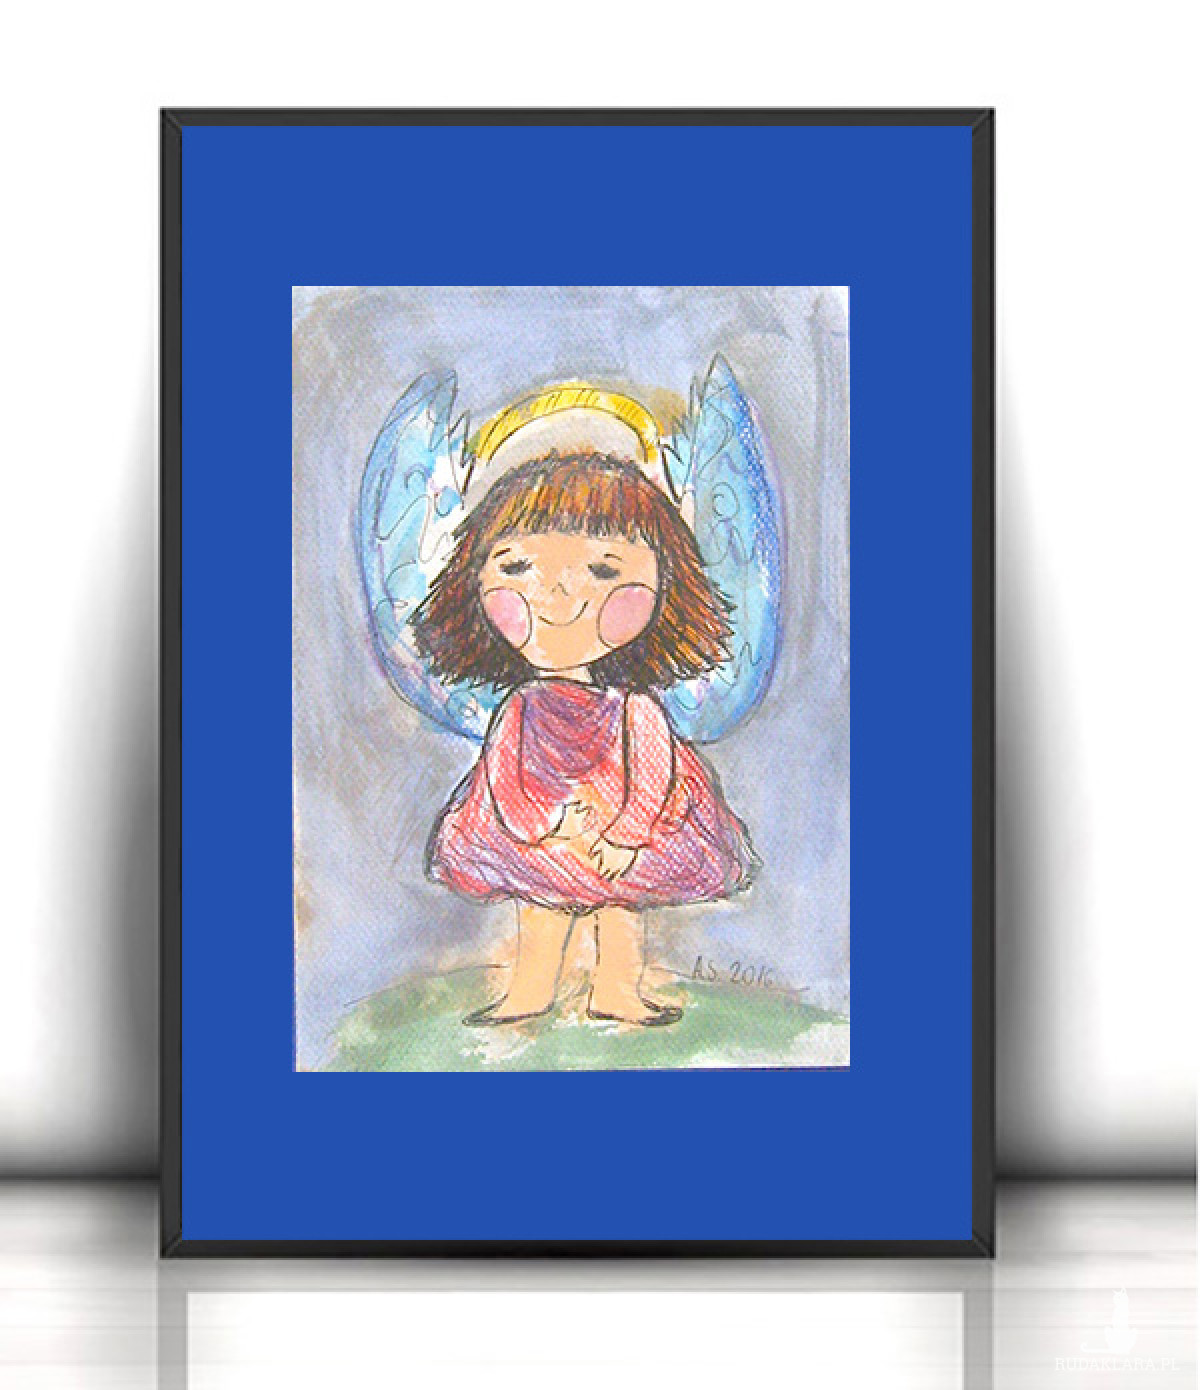 aniołek obrazek A4, akwarela z aniołkiem, aniołek rysunek 21x30, ręcznie malowany obraz z aniołkiem, anioł dekoracja na ścianę